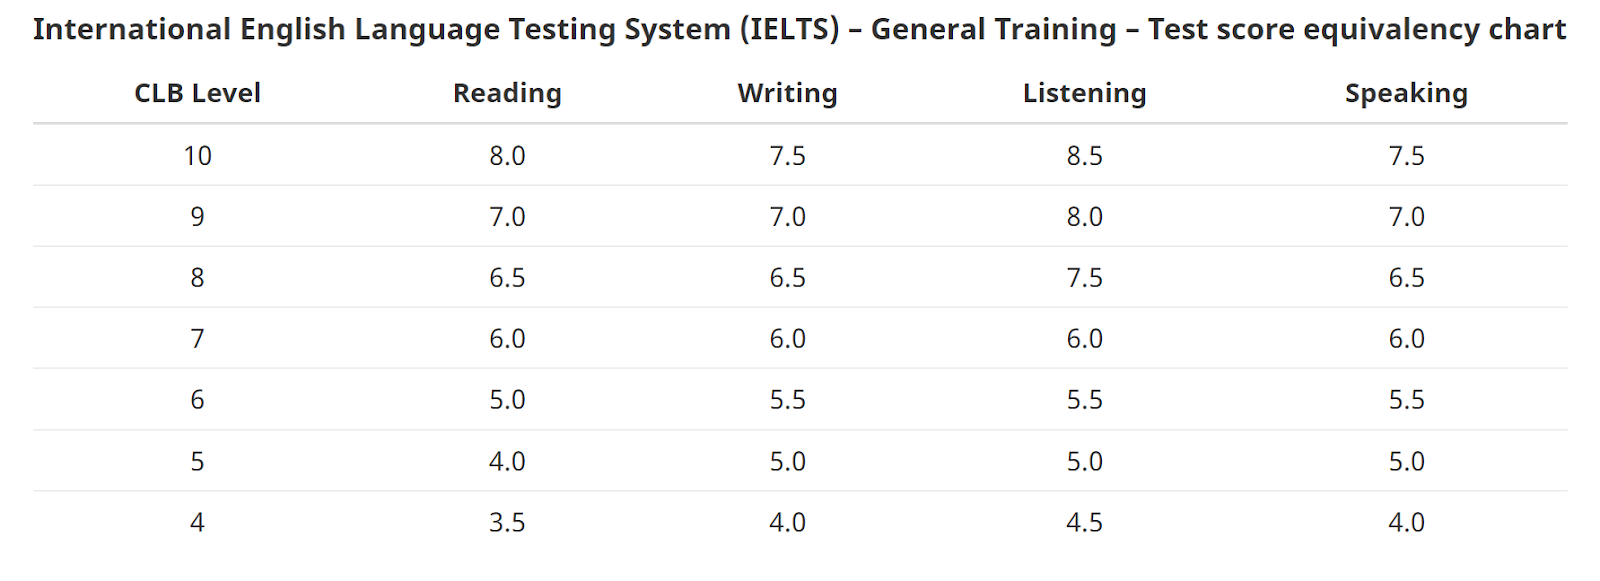 ielts-general-training-test-score-equivalency-chart